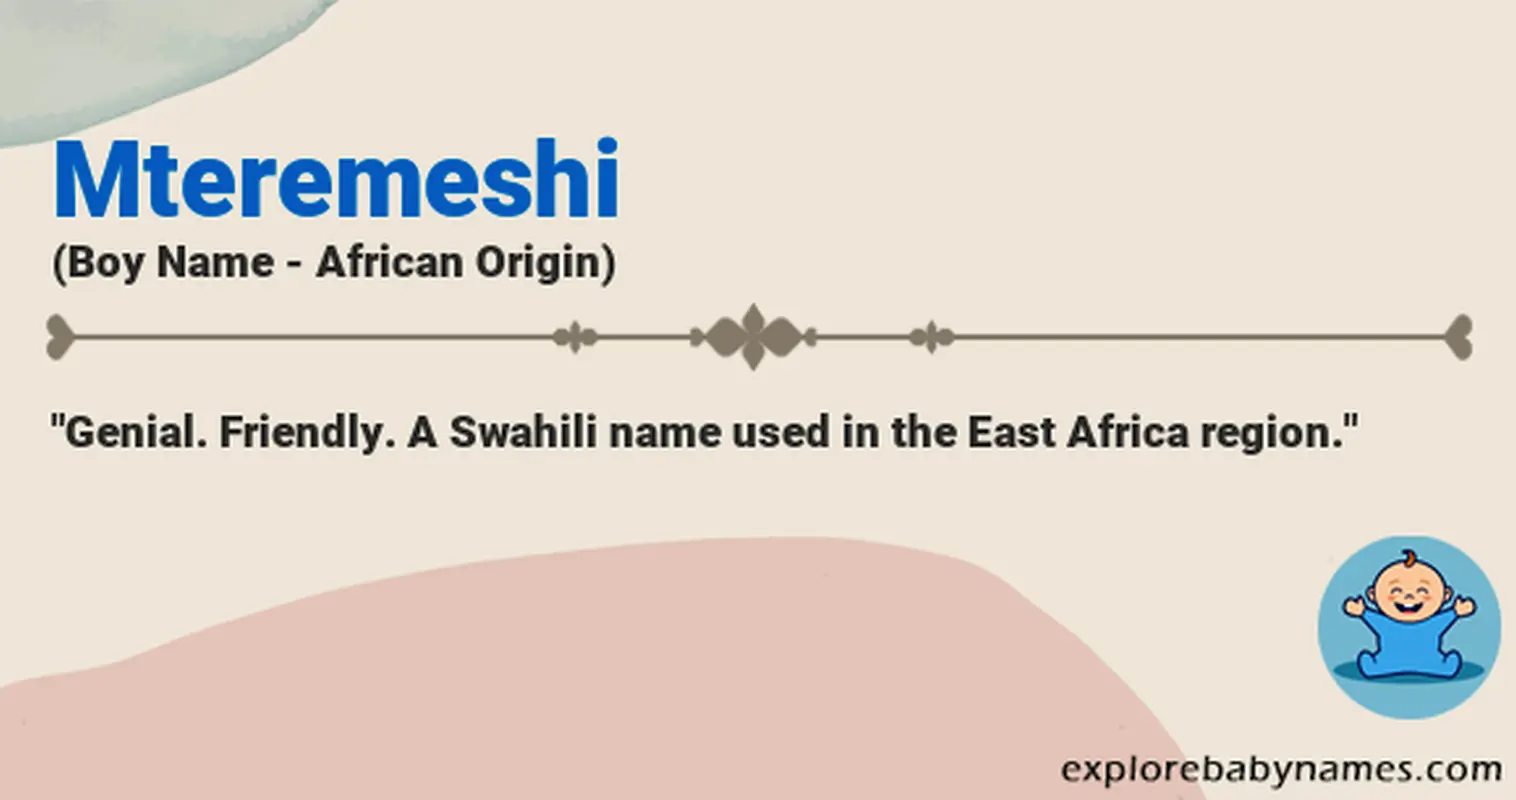 Meaning of Mteremeshi